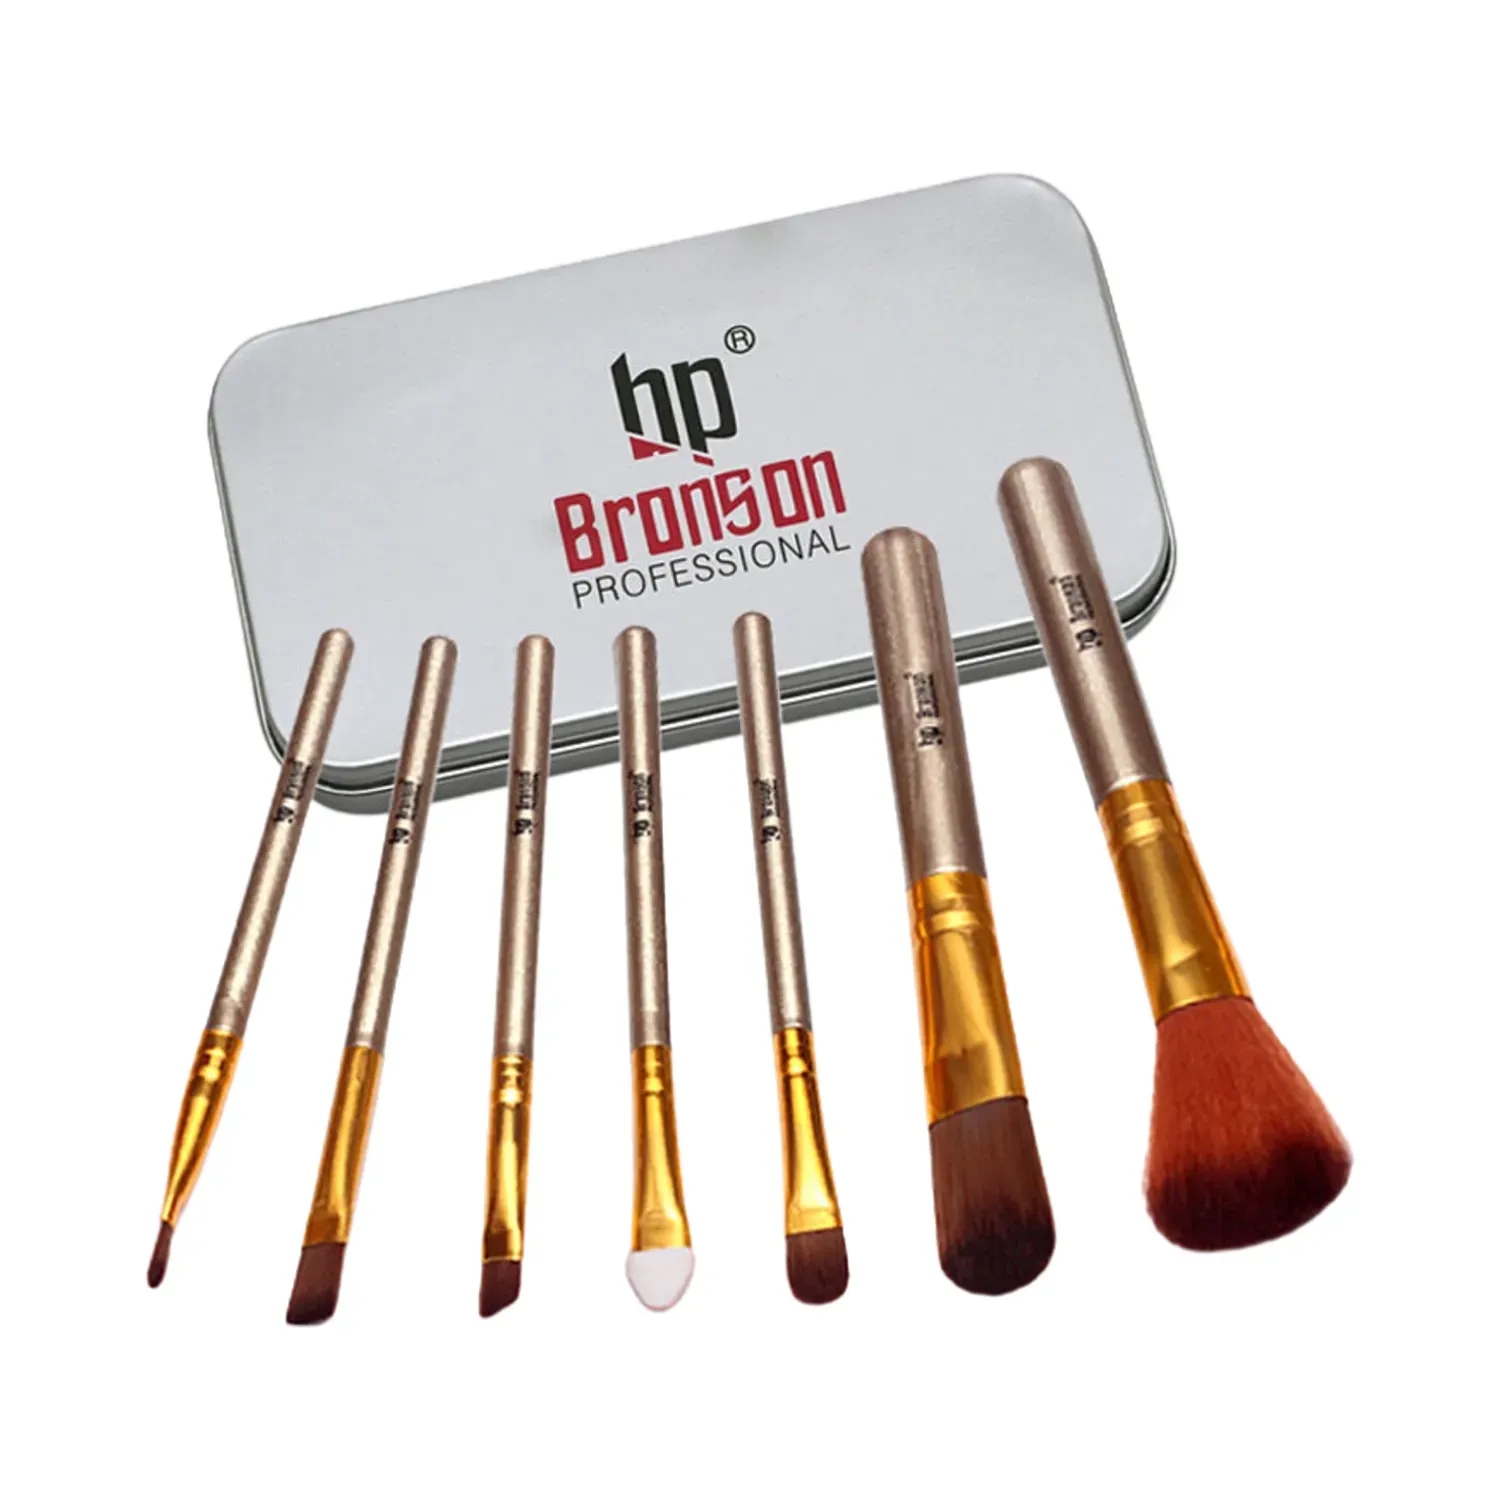 Bronson Professional | Bronson Professional Makeup Brush Set with Storage Box (7Pcs)